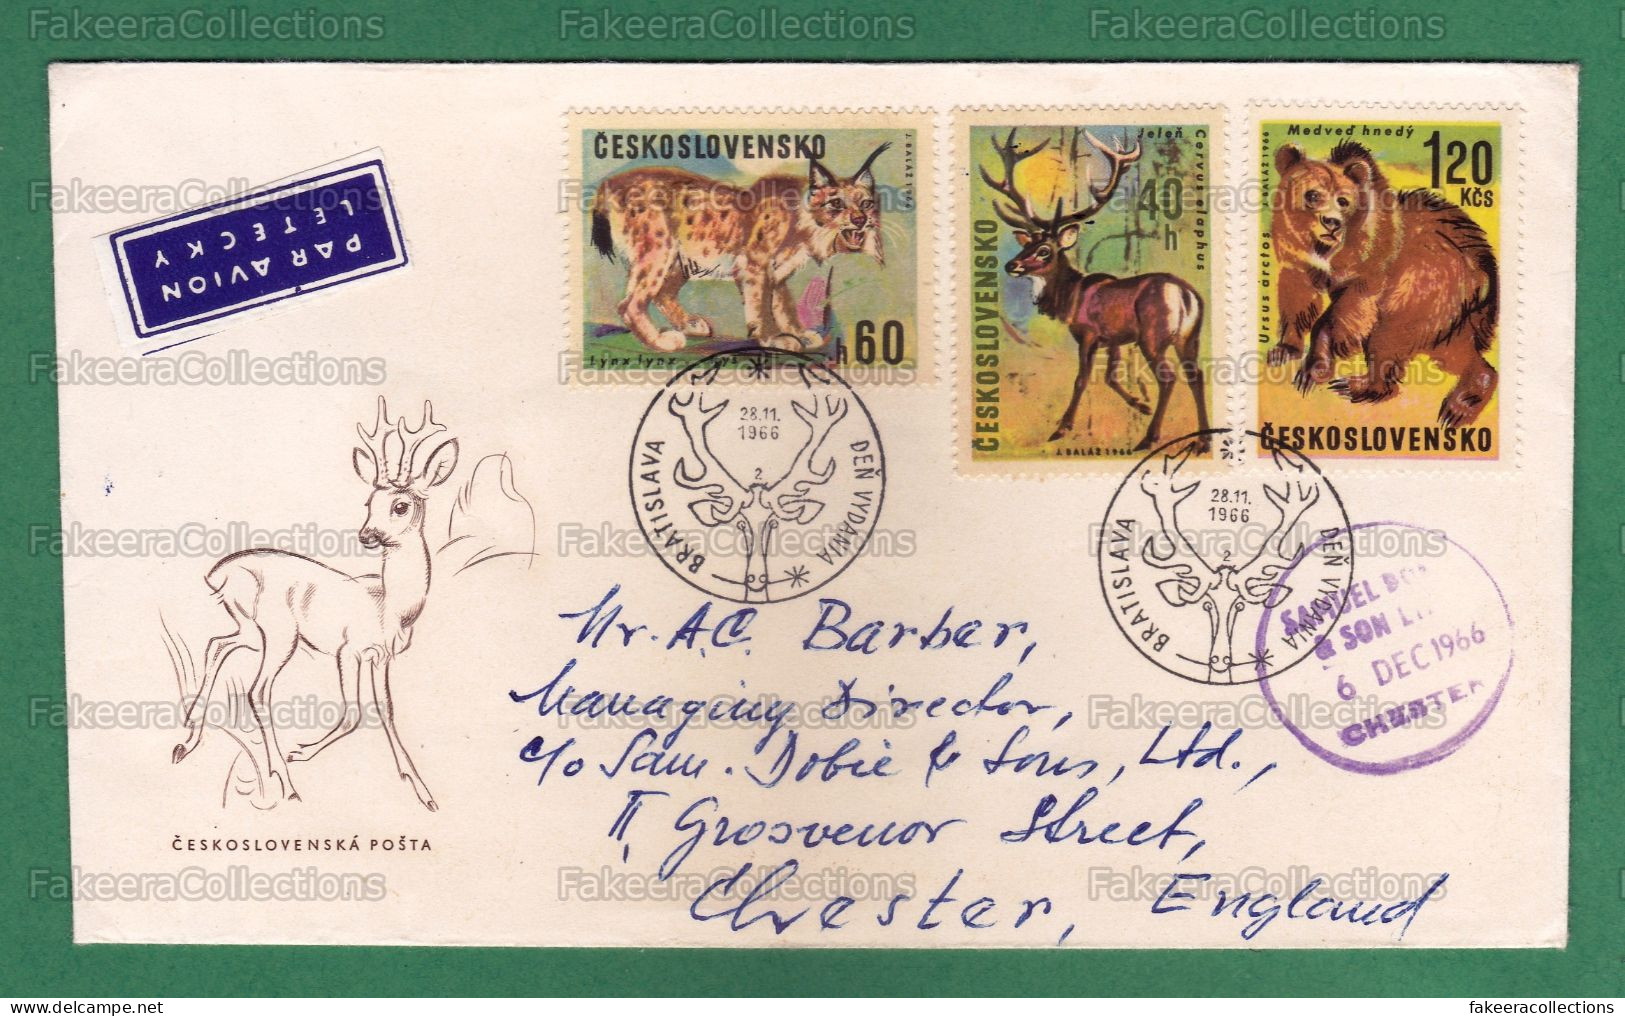 CZECHOSLOVAKIA 1966 CZECH - ANIMALS 3v FDC Postal Used - LYNX, RED DEER ( Cervus Elaphus ), BROWN BEAR ( Ursus Arctos ) - Big Cats (cats Of Prey)